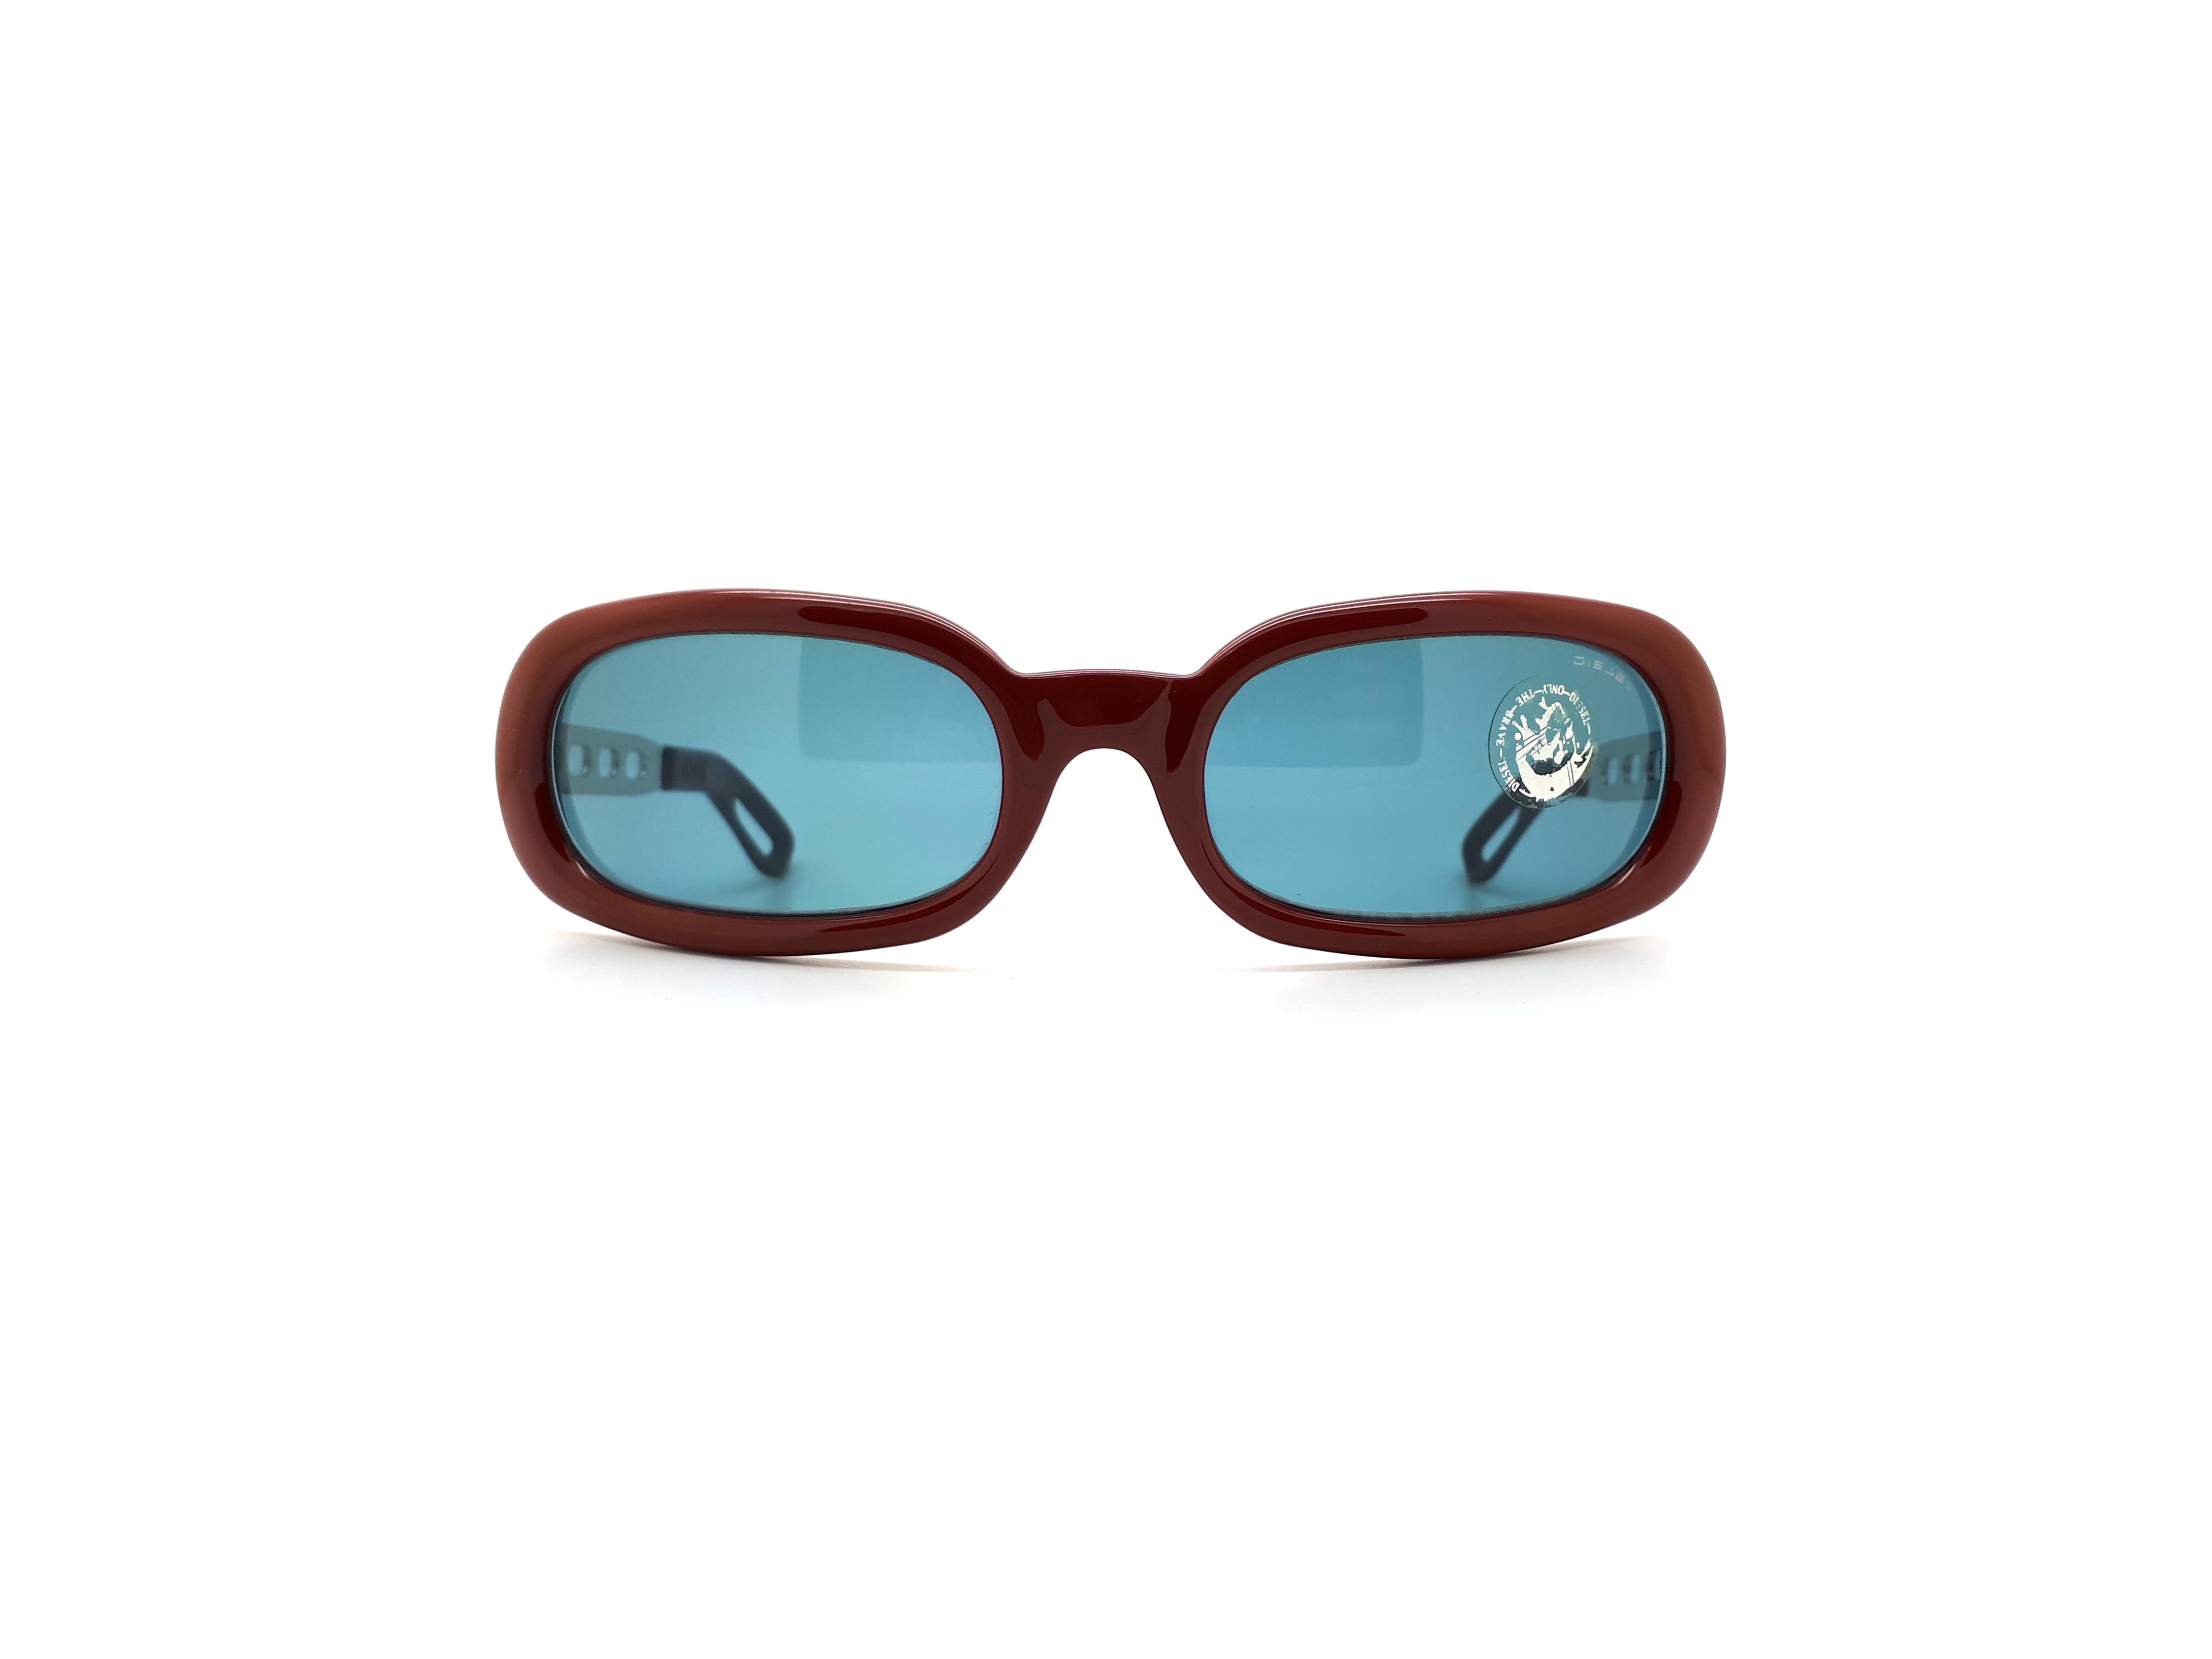 Vintage Sunglasses: Men's, Women's, Aviators, Rounds – Ed & Sarna